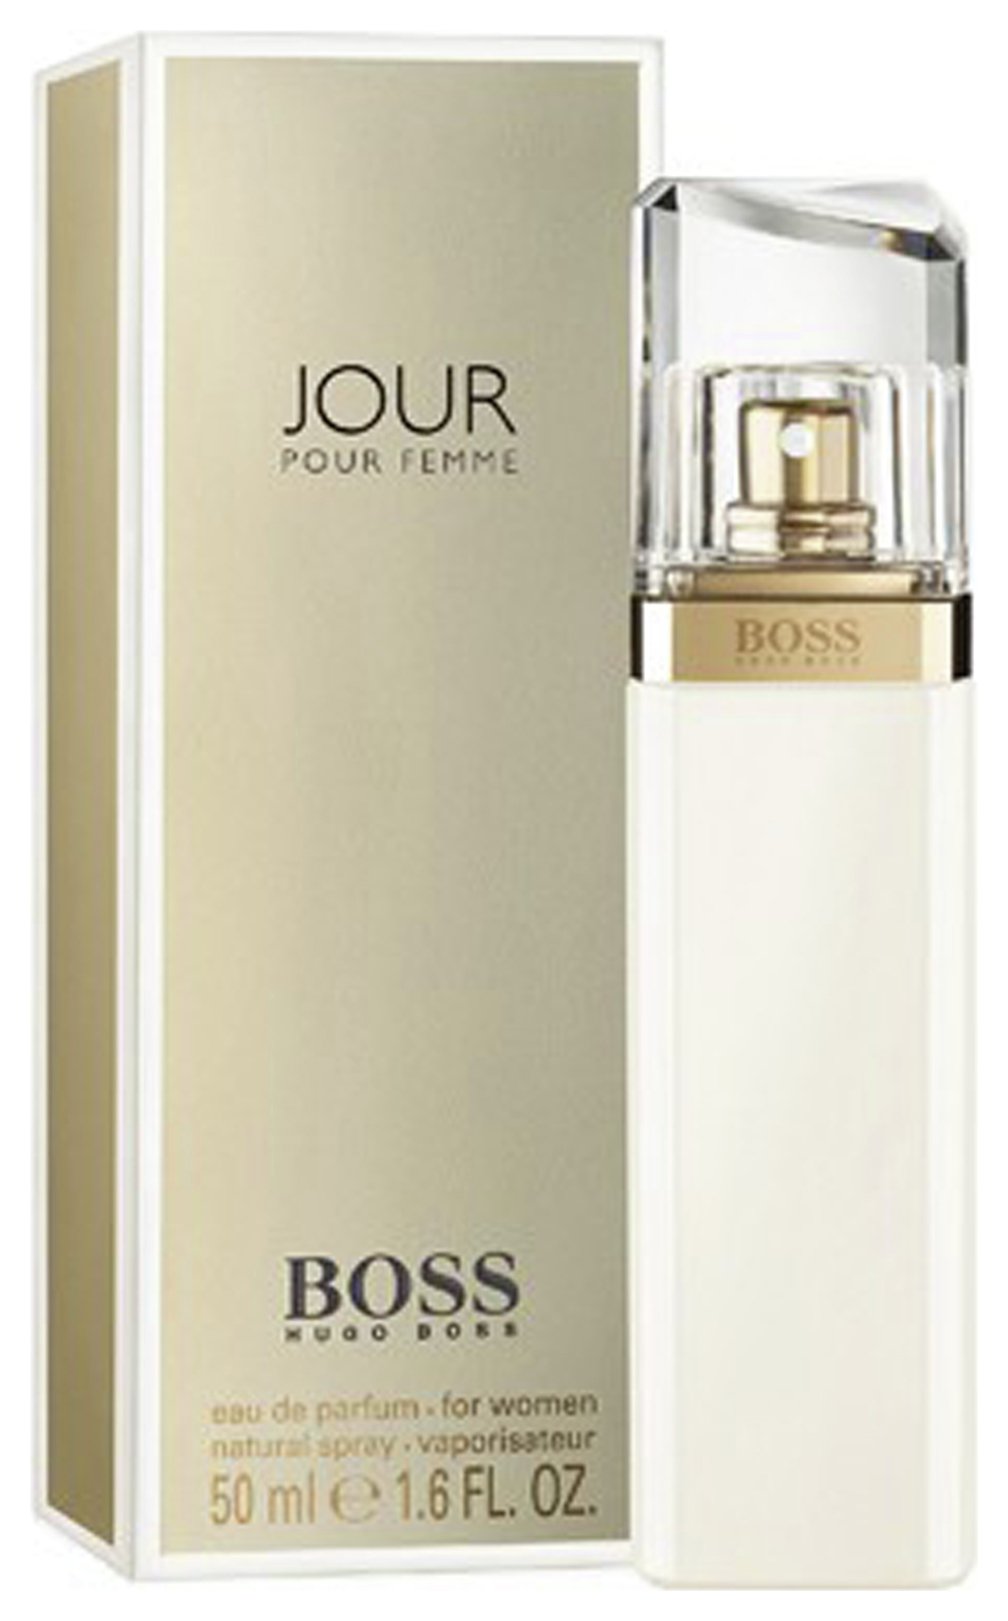 Hugo Boss Jour Eau de Parfum Spray for Women - 50ml